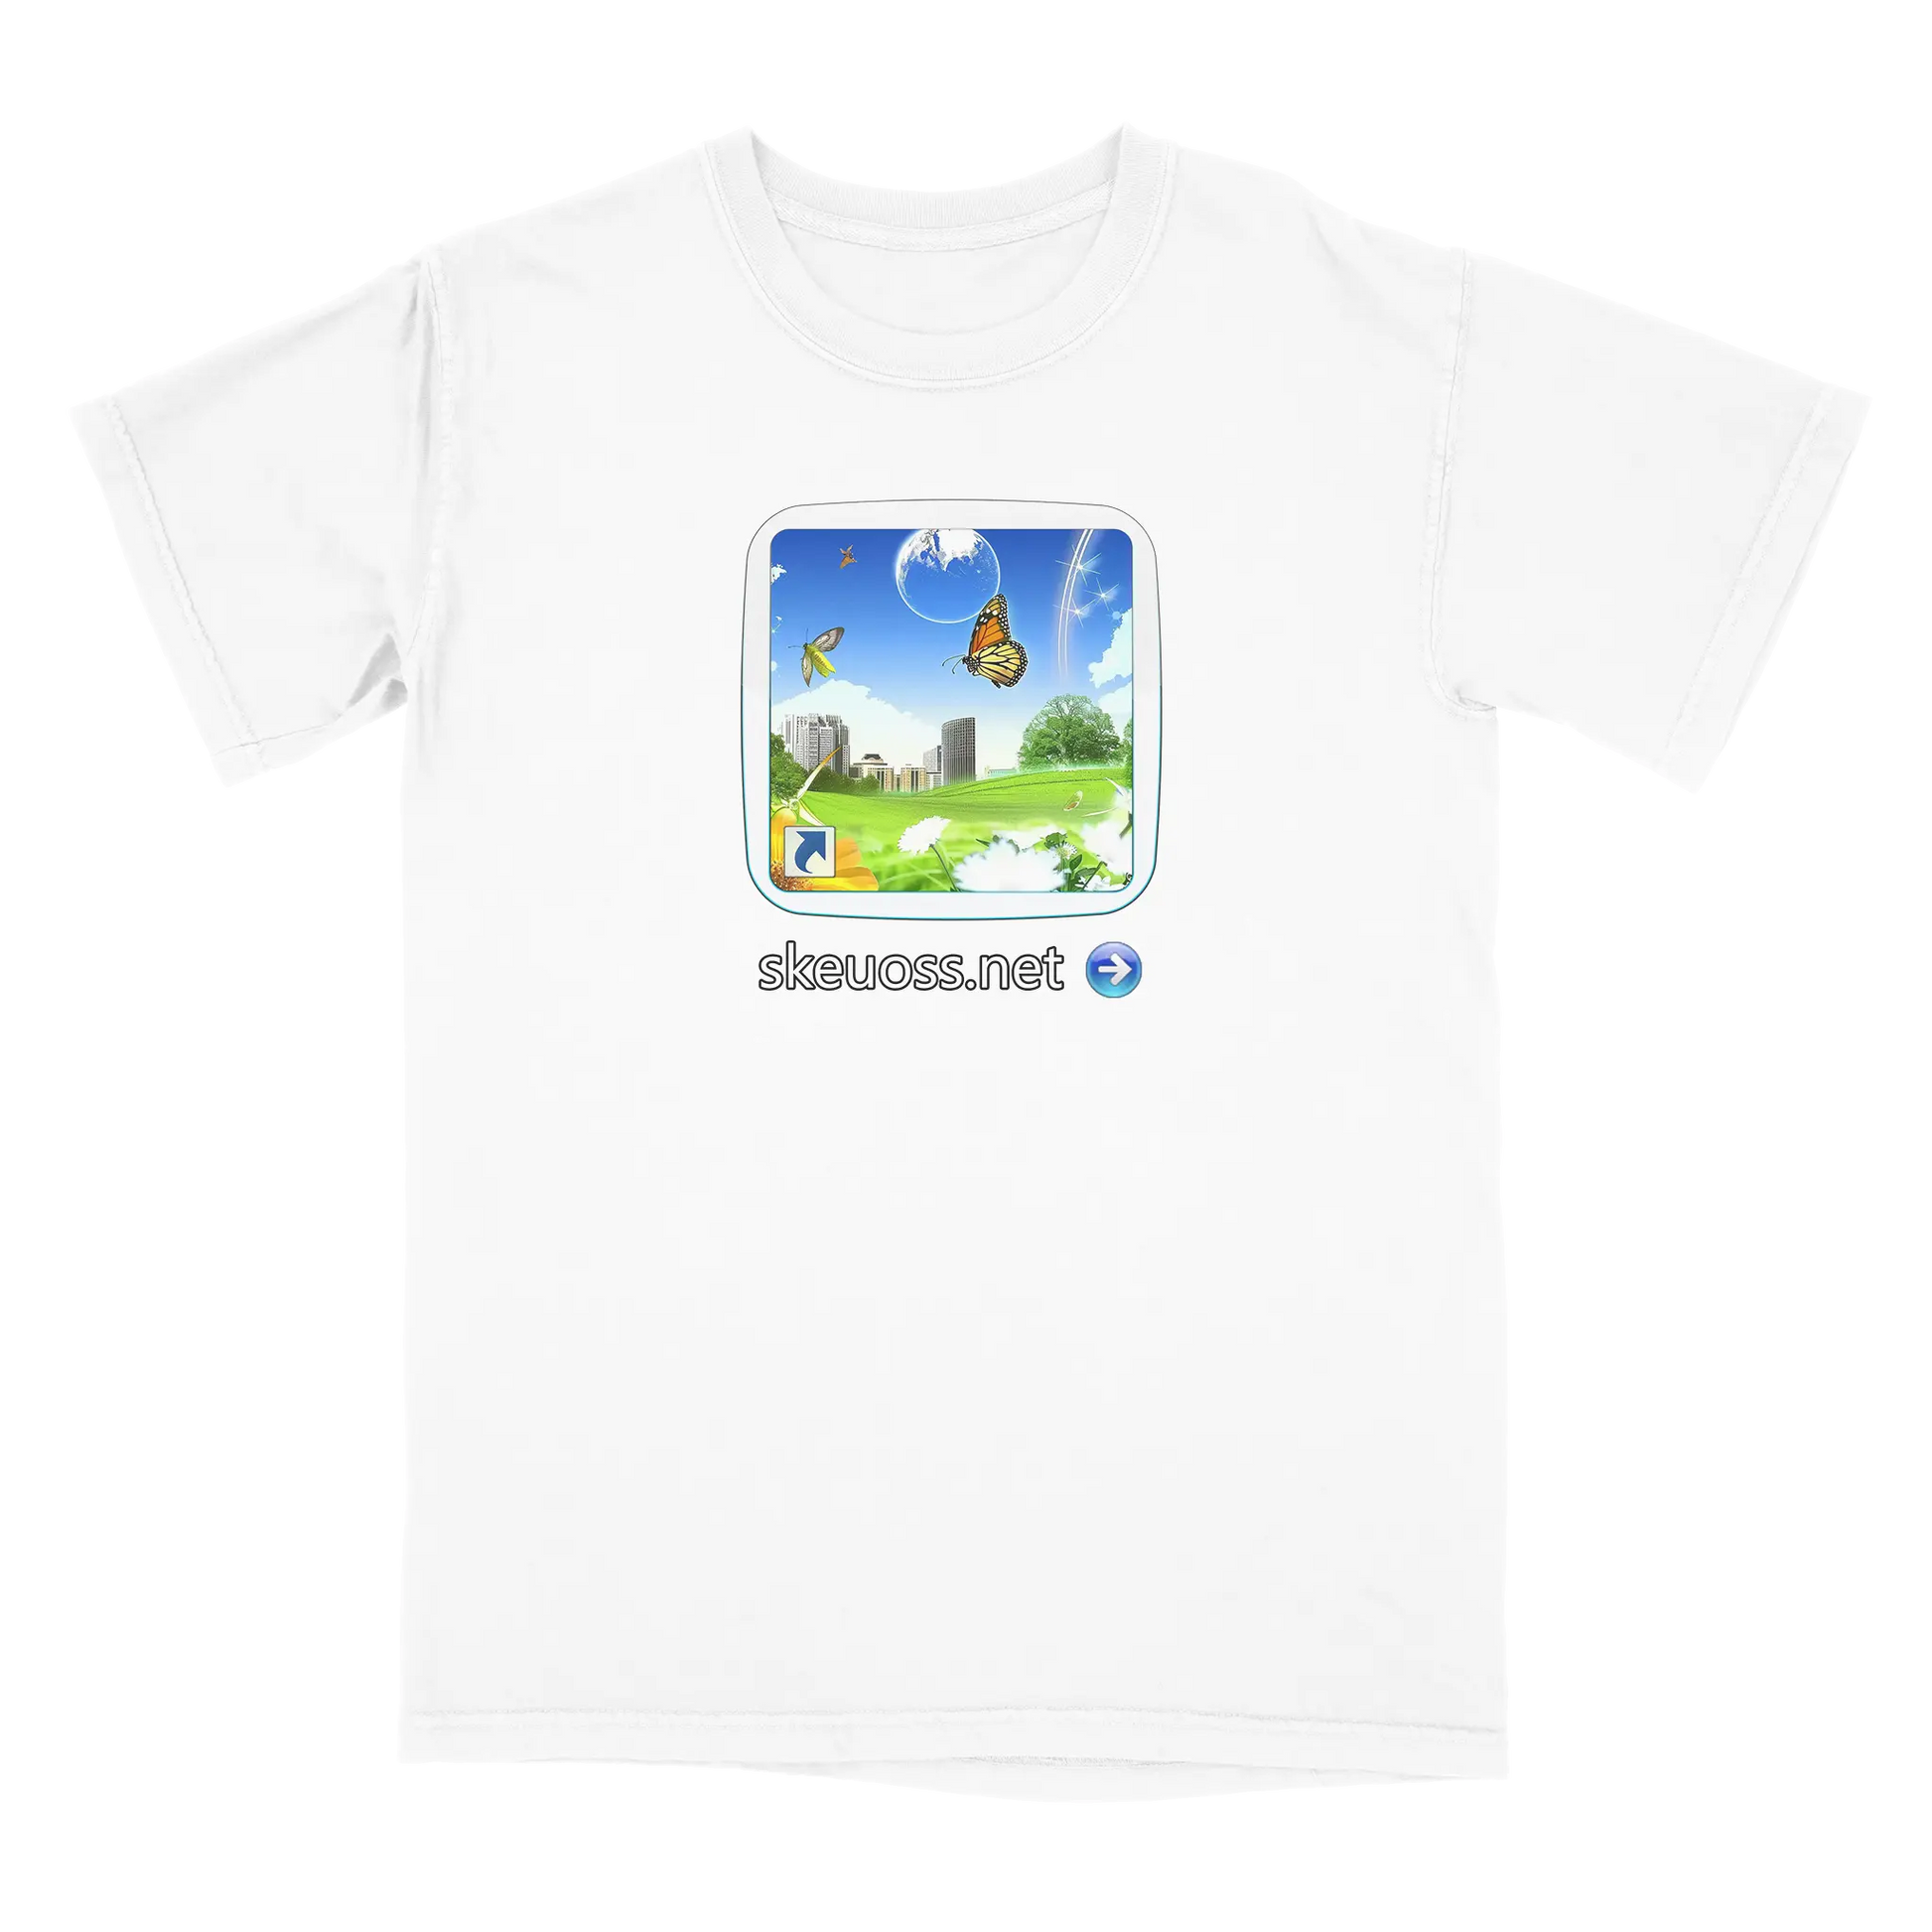 Frutiger Aero T-shirt - User Login Collection - User 375